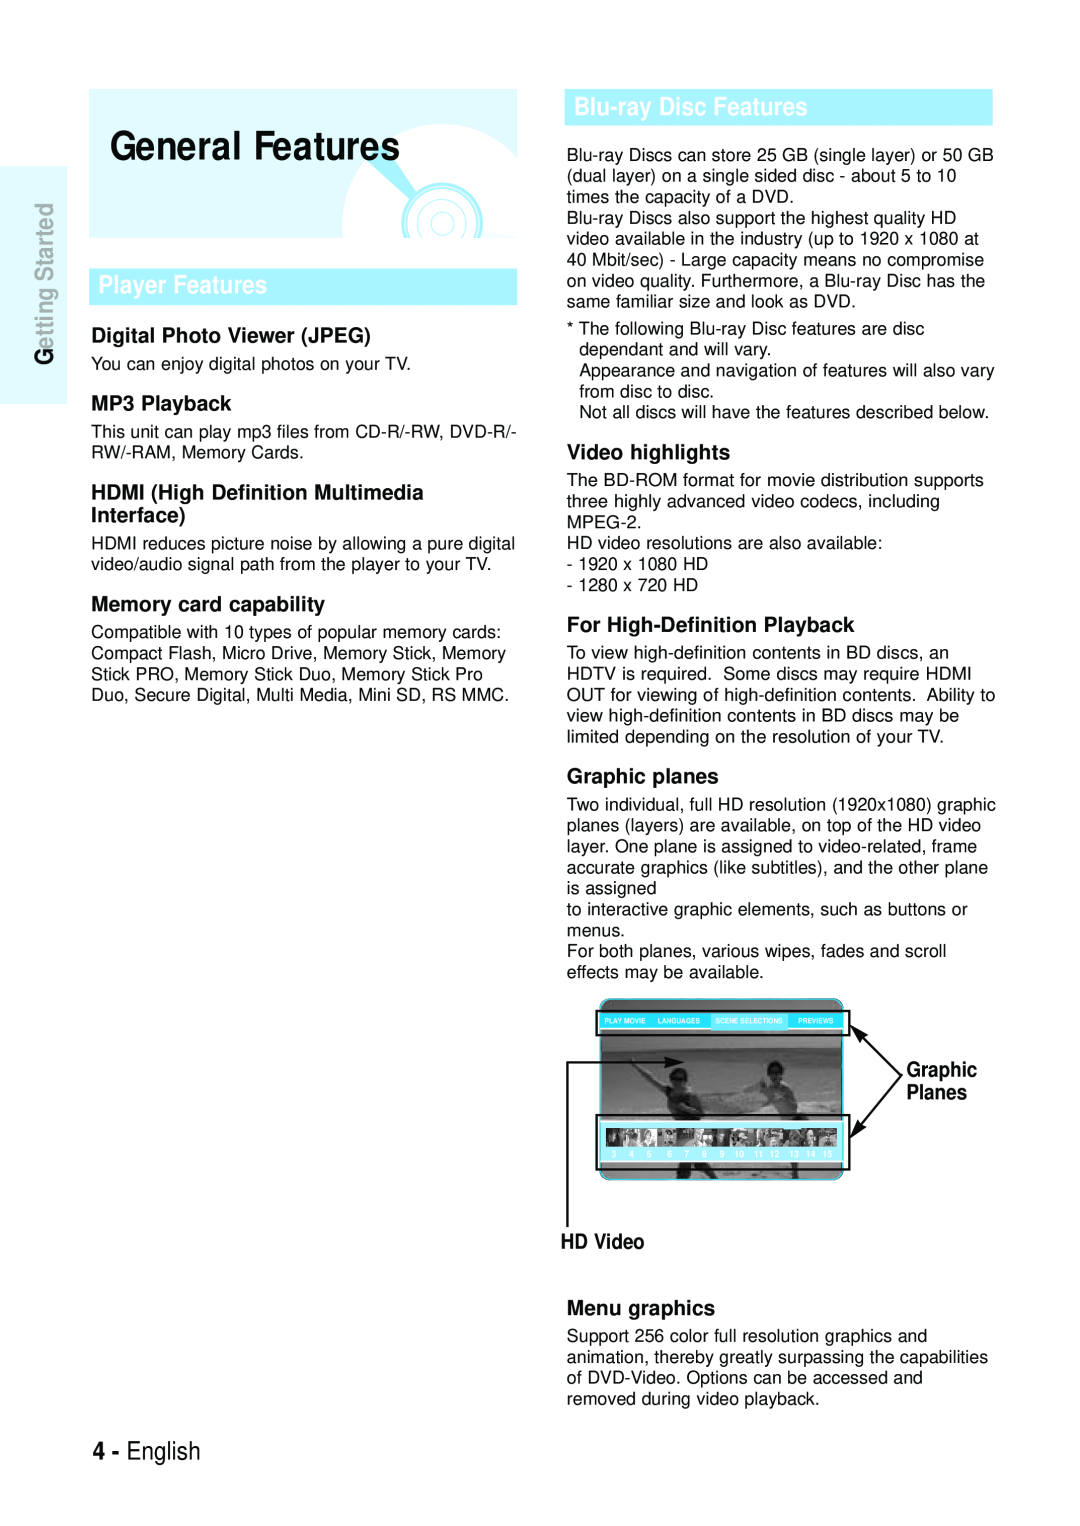 Samsung Blu-ray Disc manual General Features, English, Digital Photo Viewer JPEG, MP3 Playback, Memory card capability 